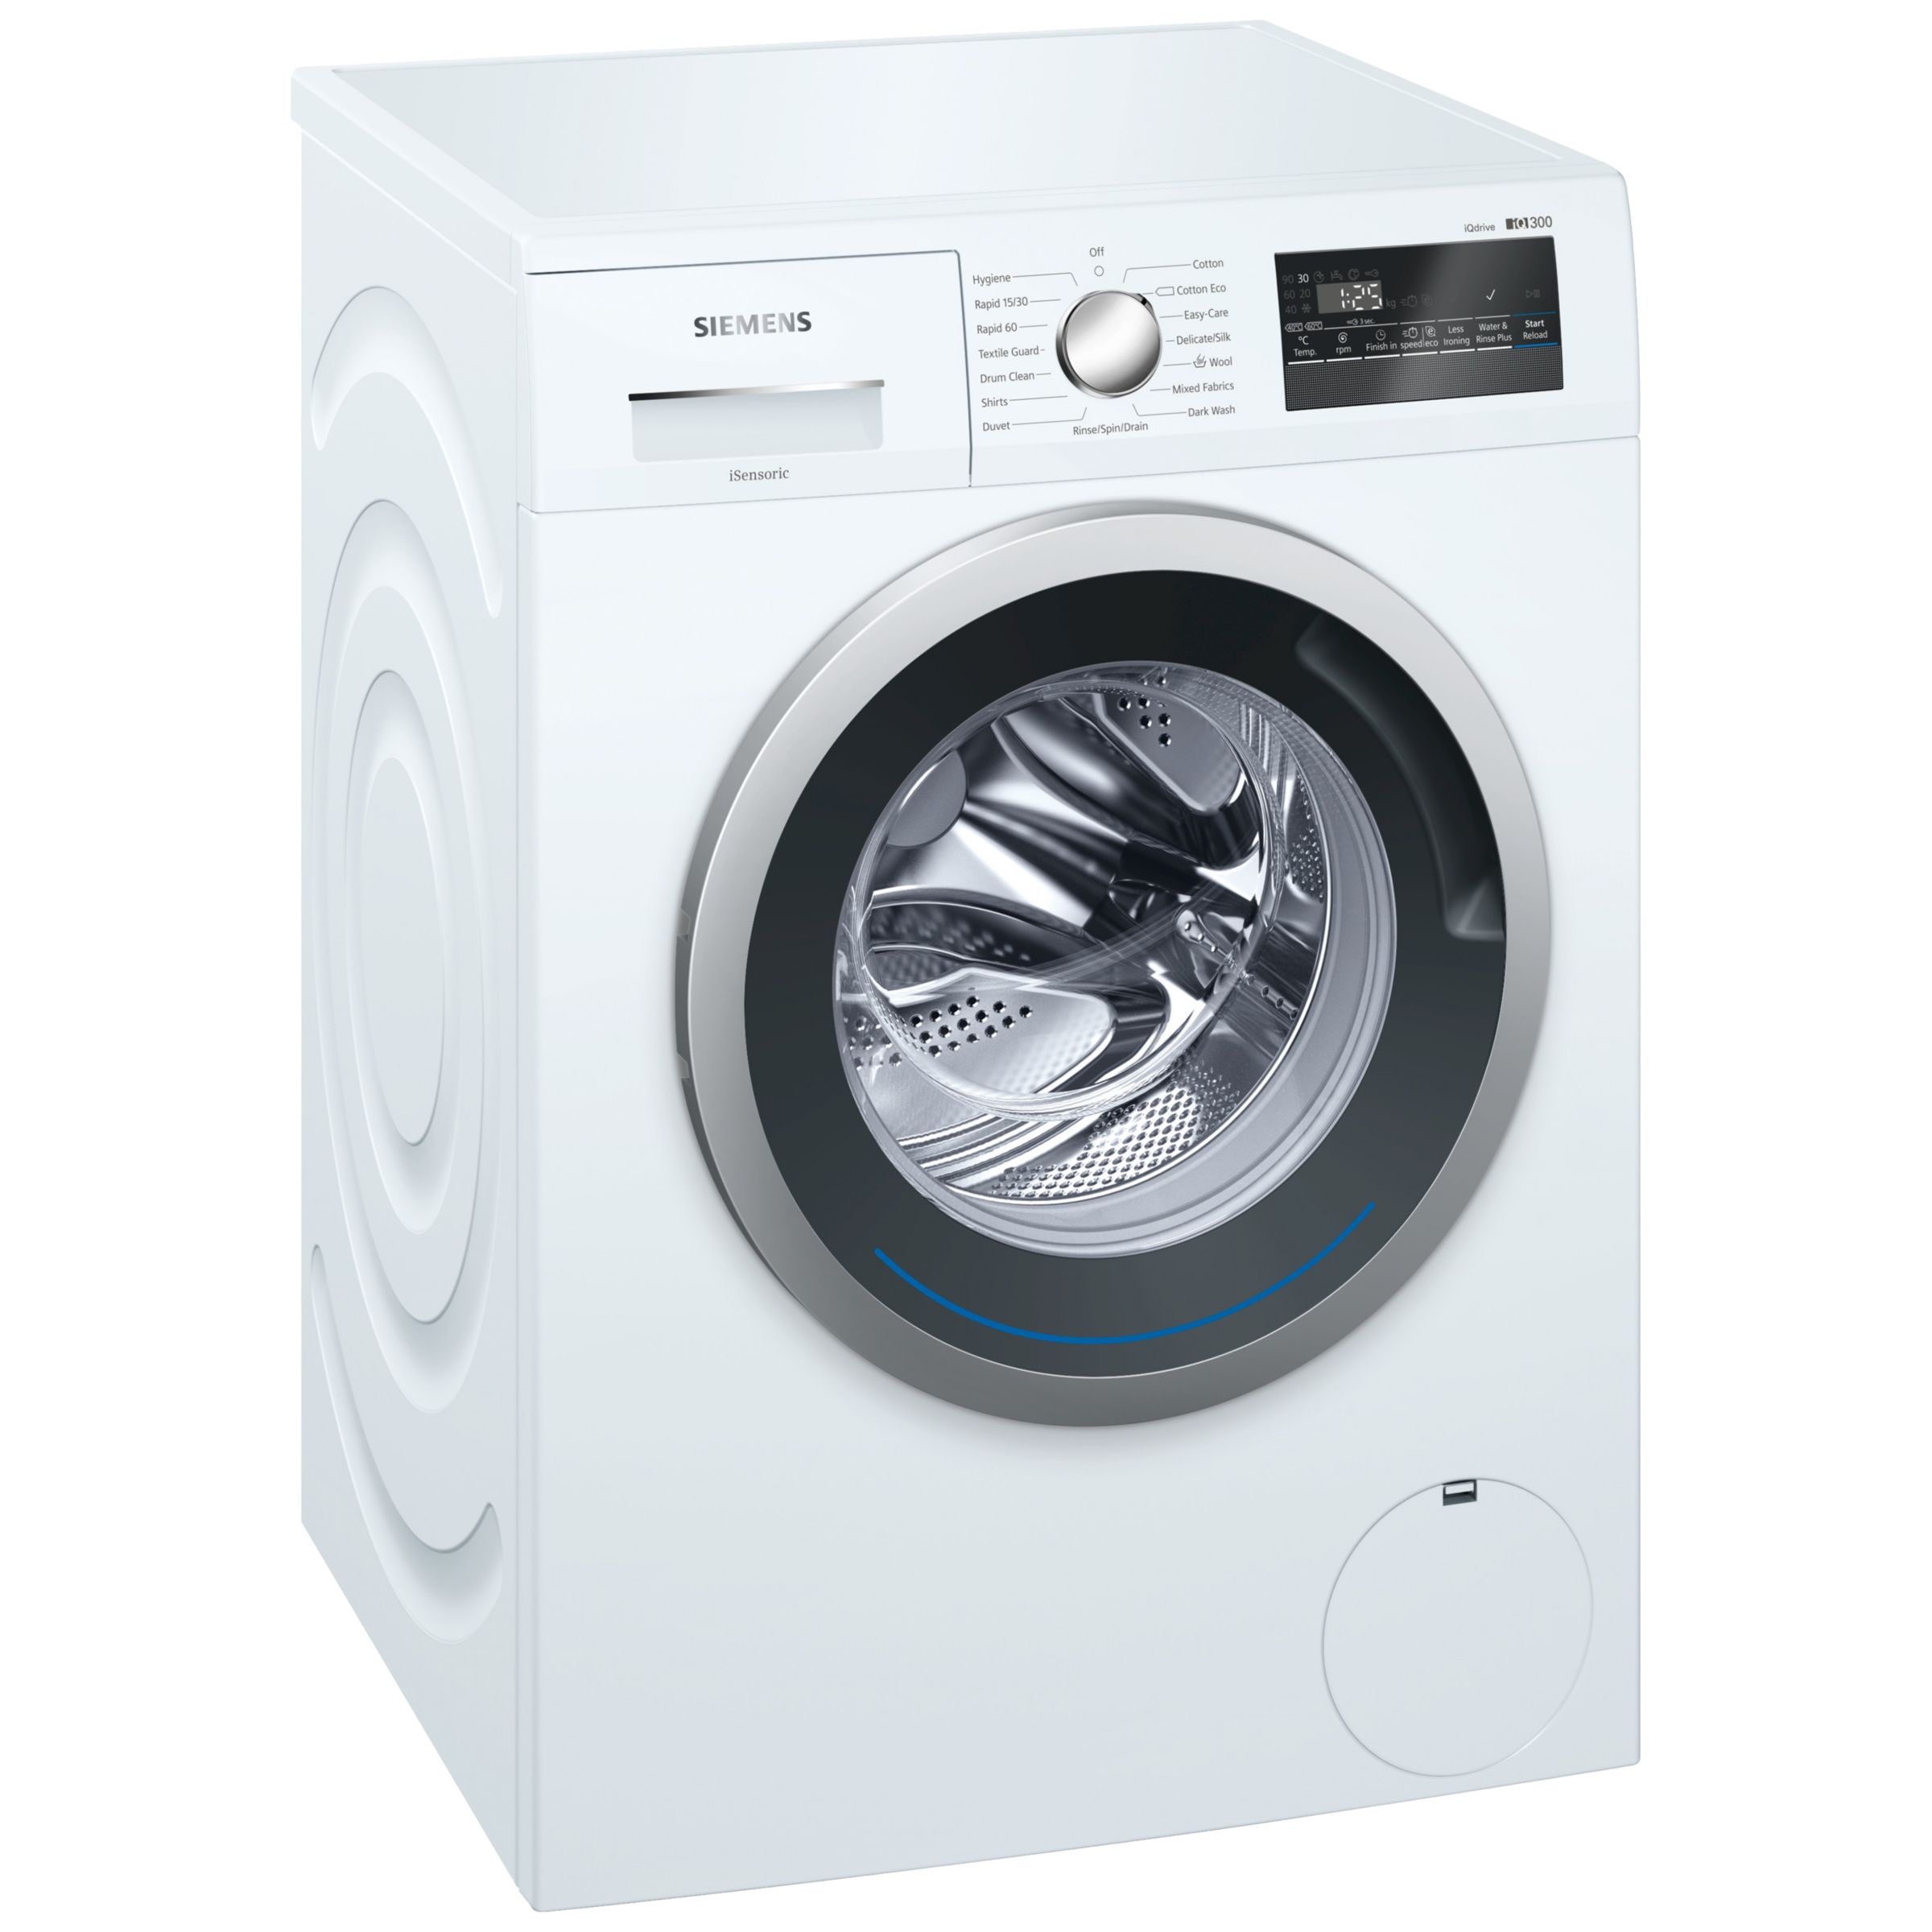 Siemens WM12N201GB Freestanding Washing Machine, 8kg Load, A+++ Energy Rating, 1200rpm Spin, White